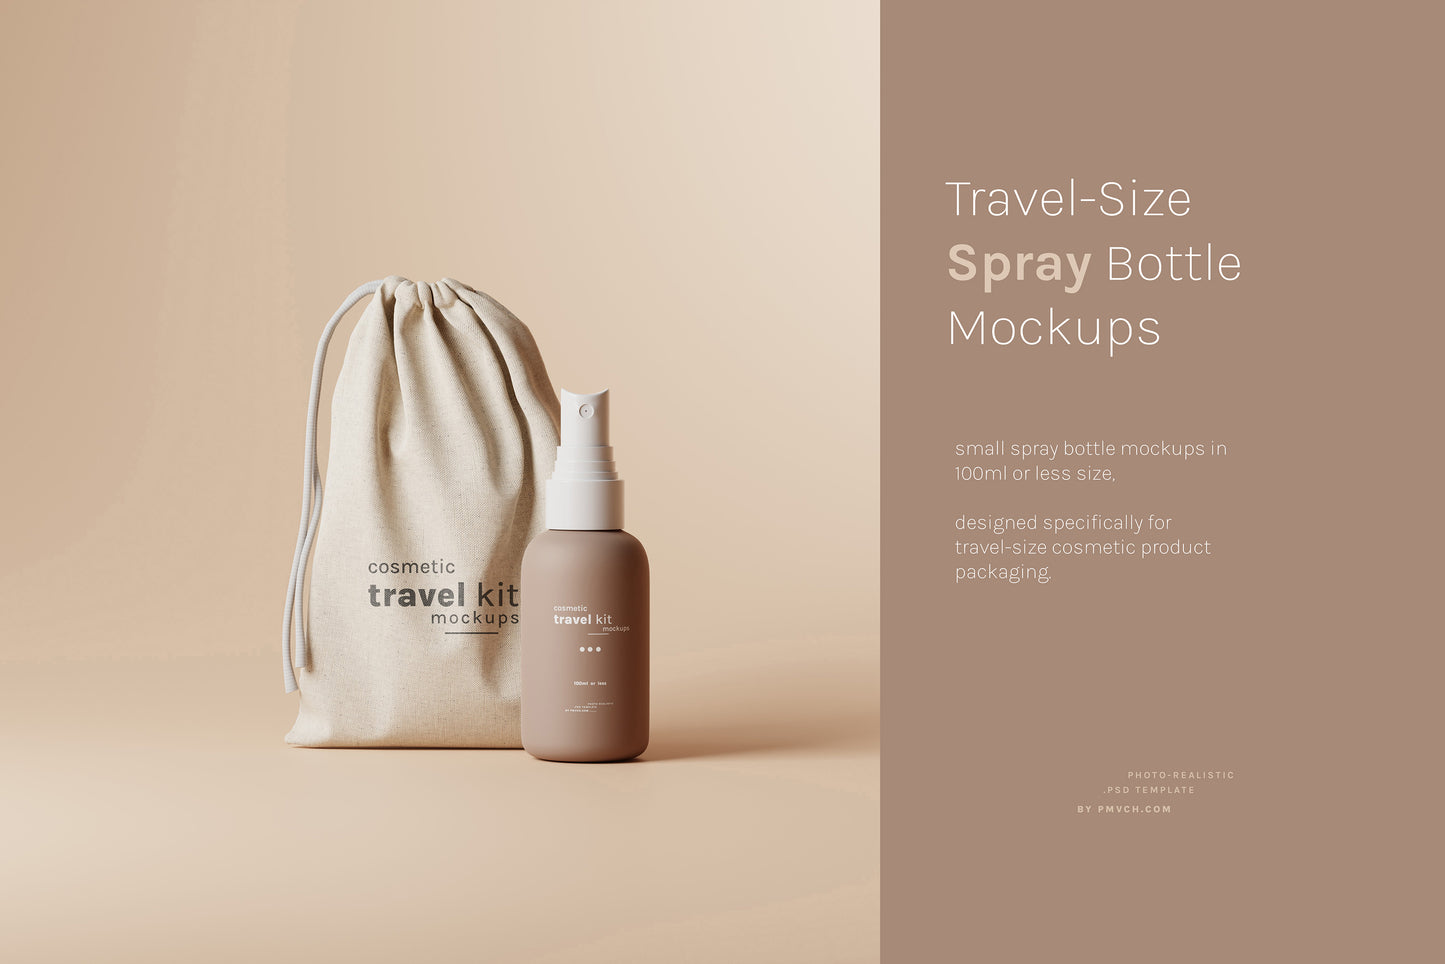 Travel-Size Small Spray Bottle Mockups